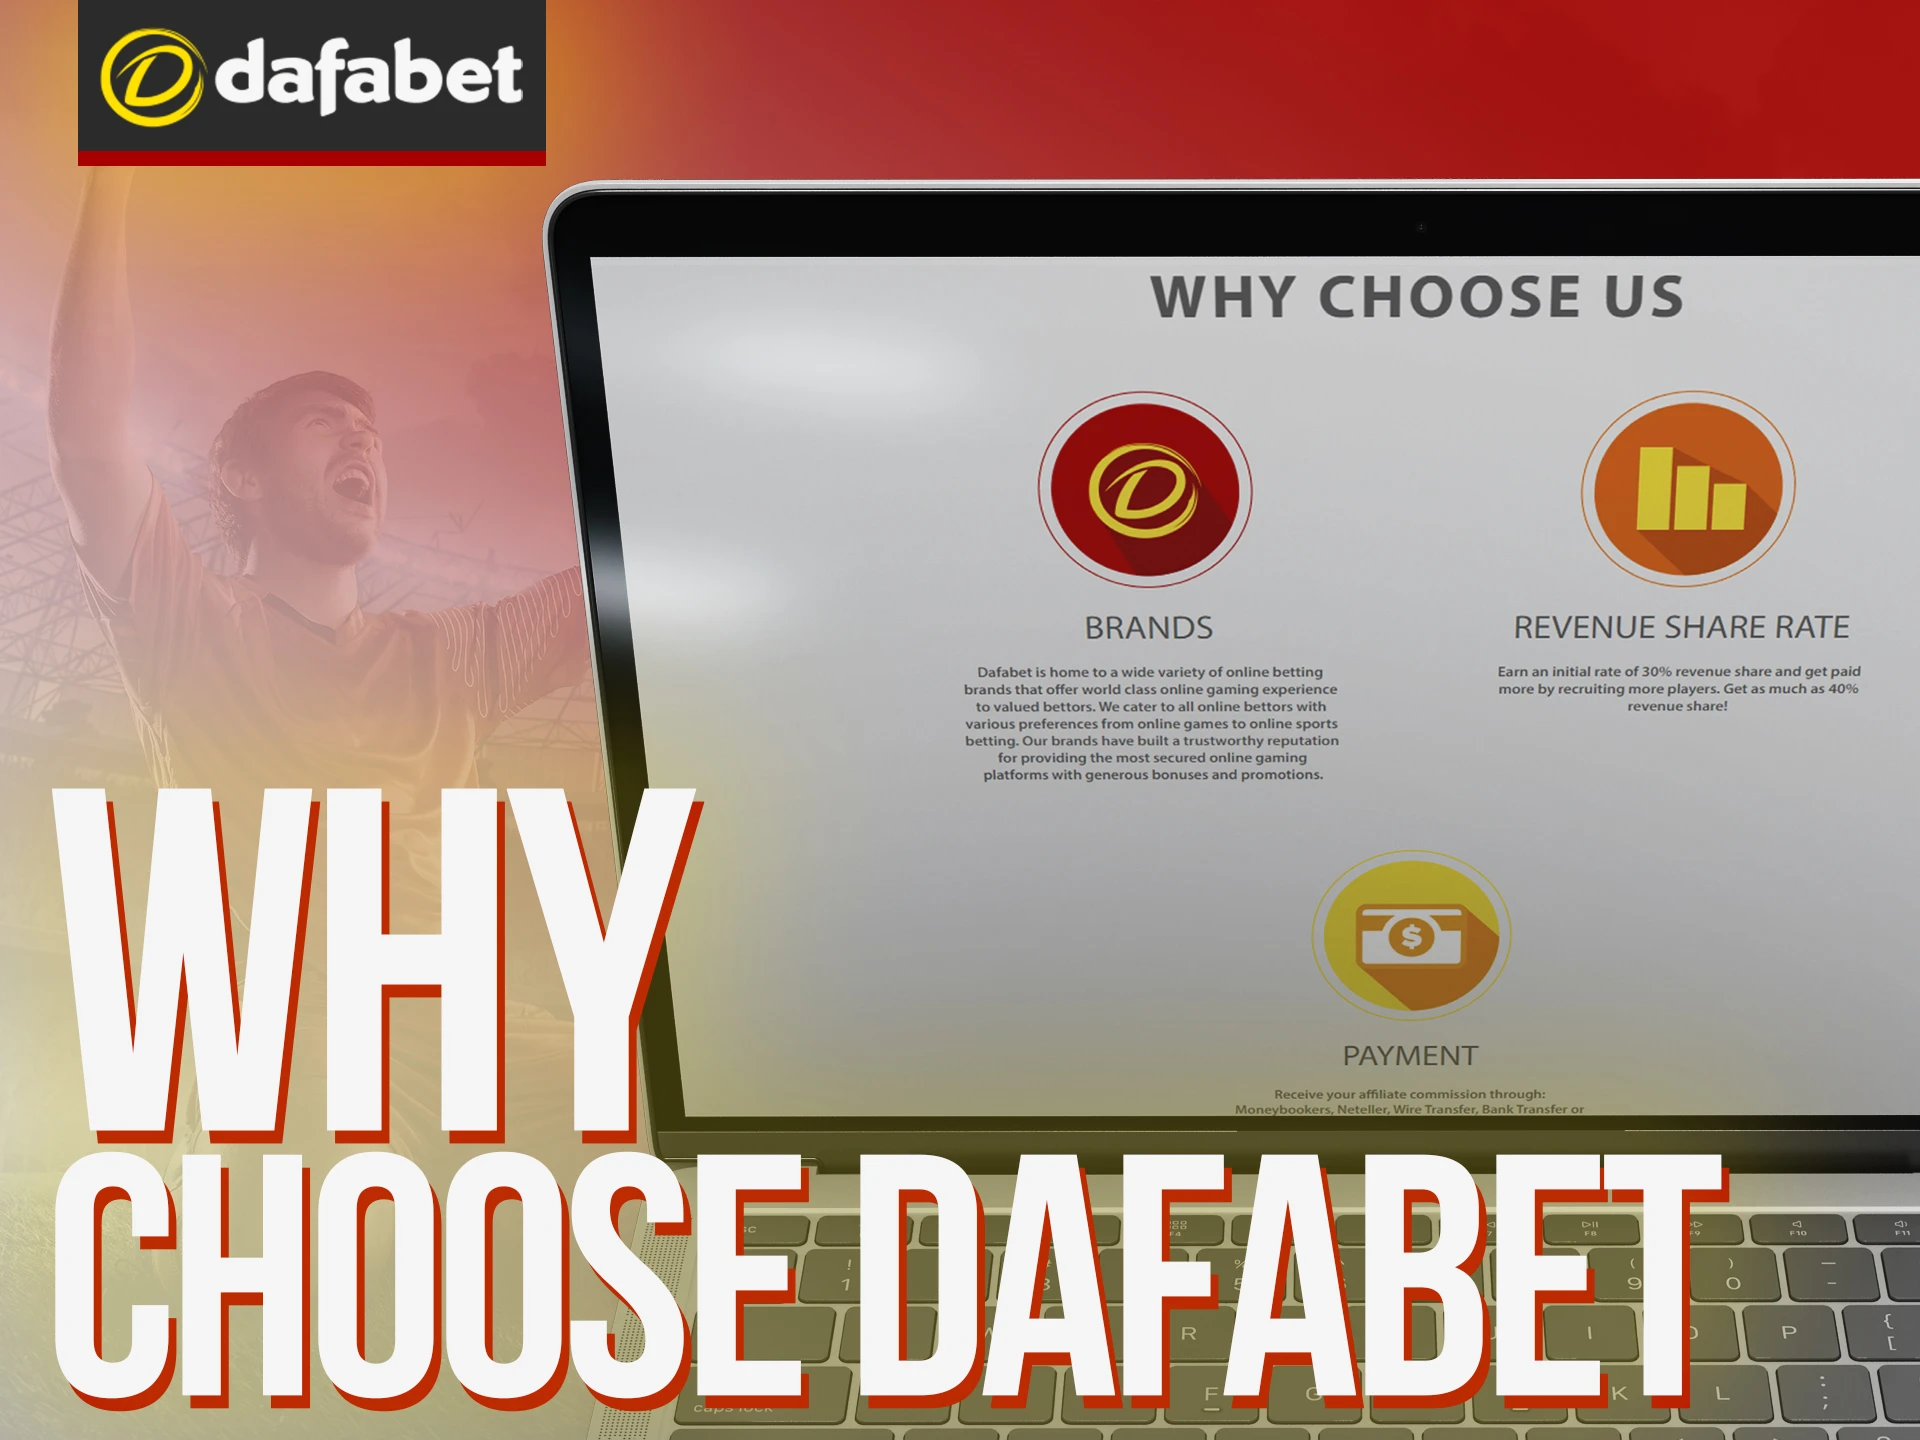 Dafabet affiliate program provides special bonuses for its members.